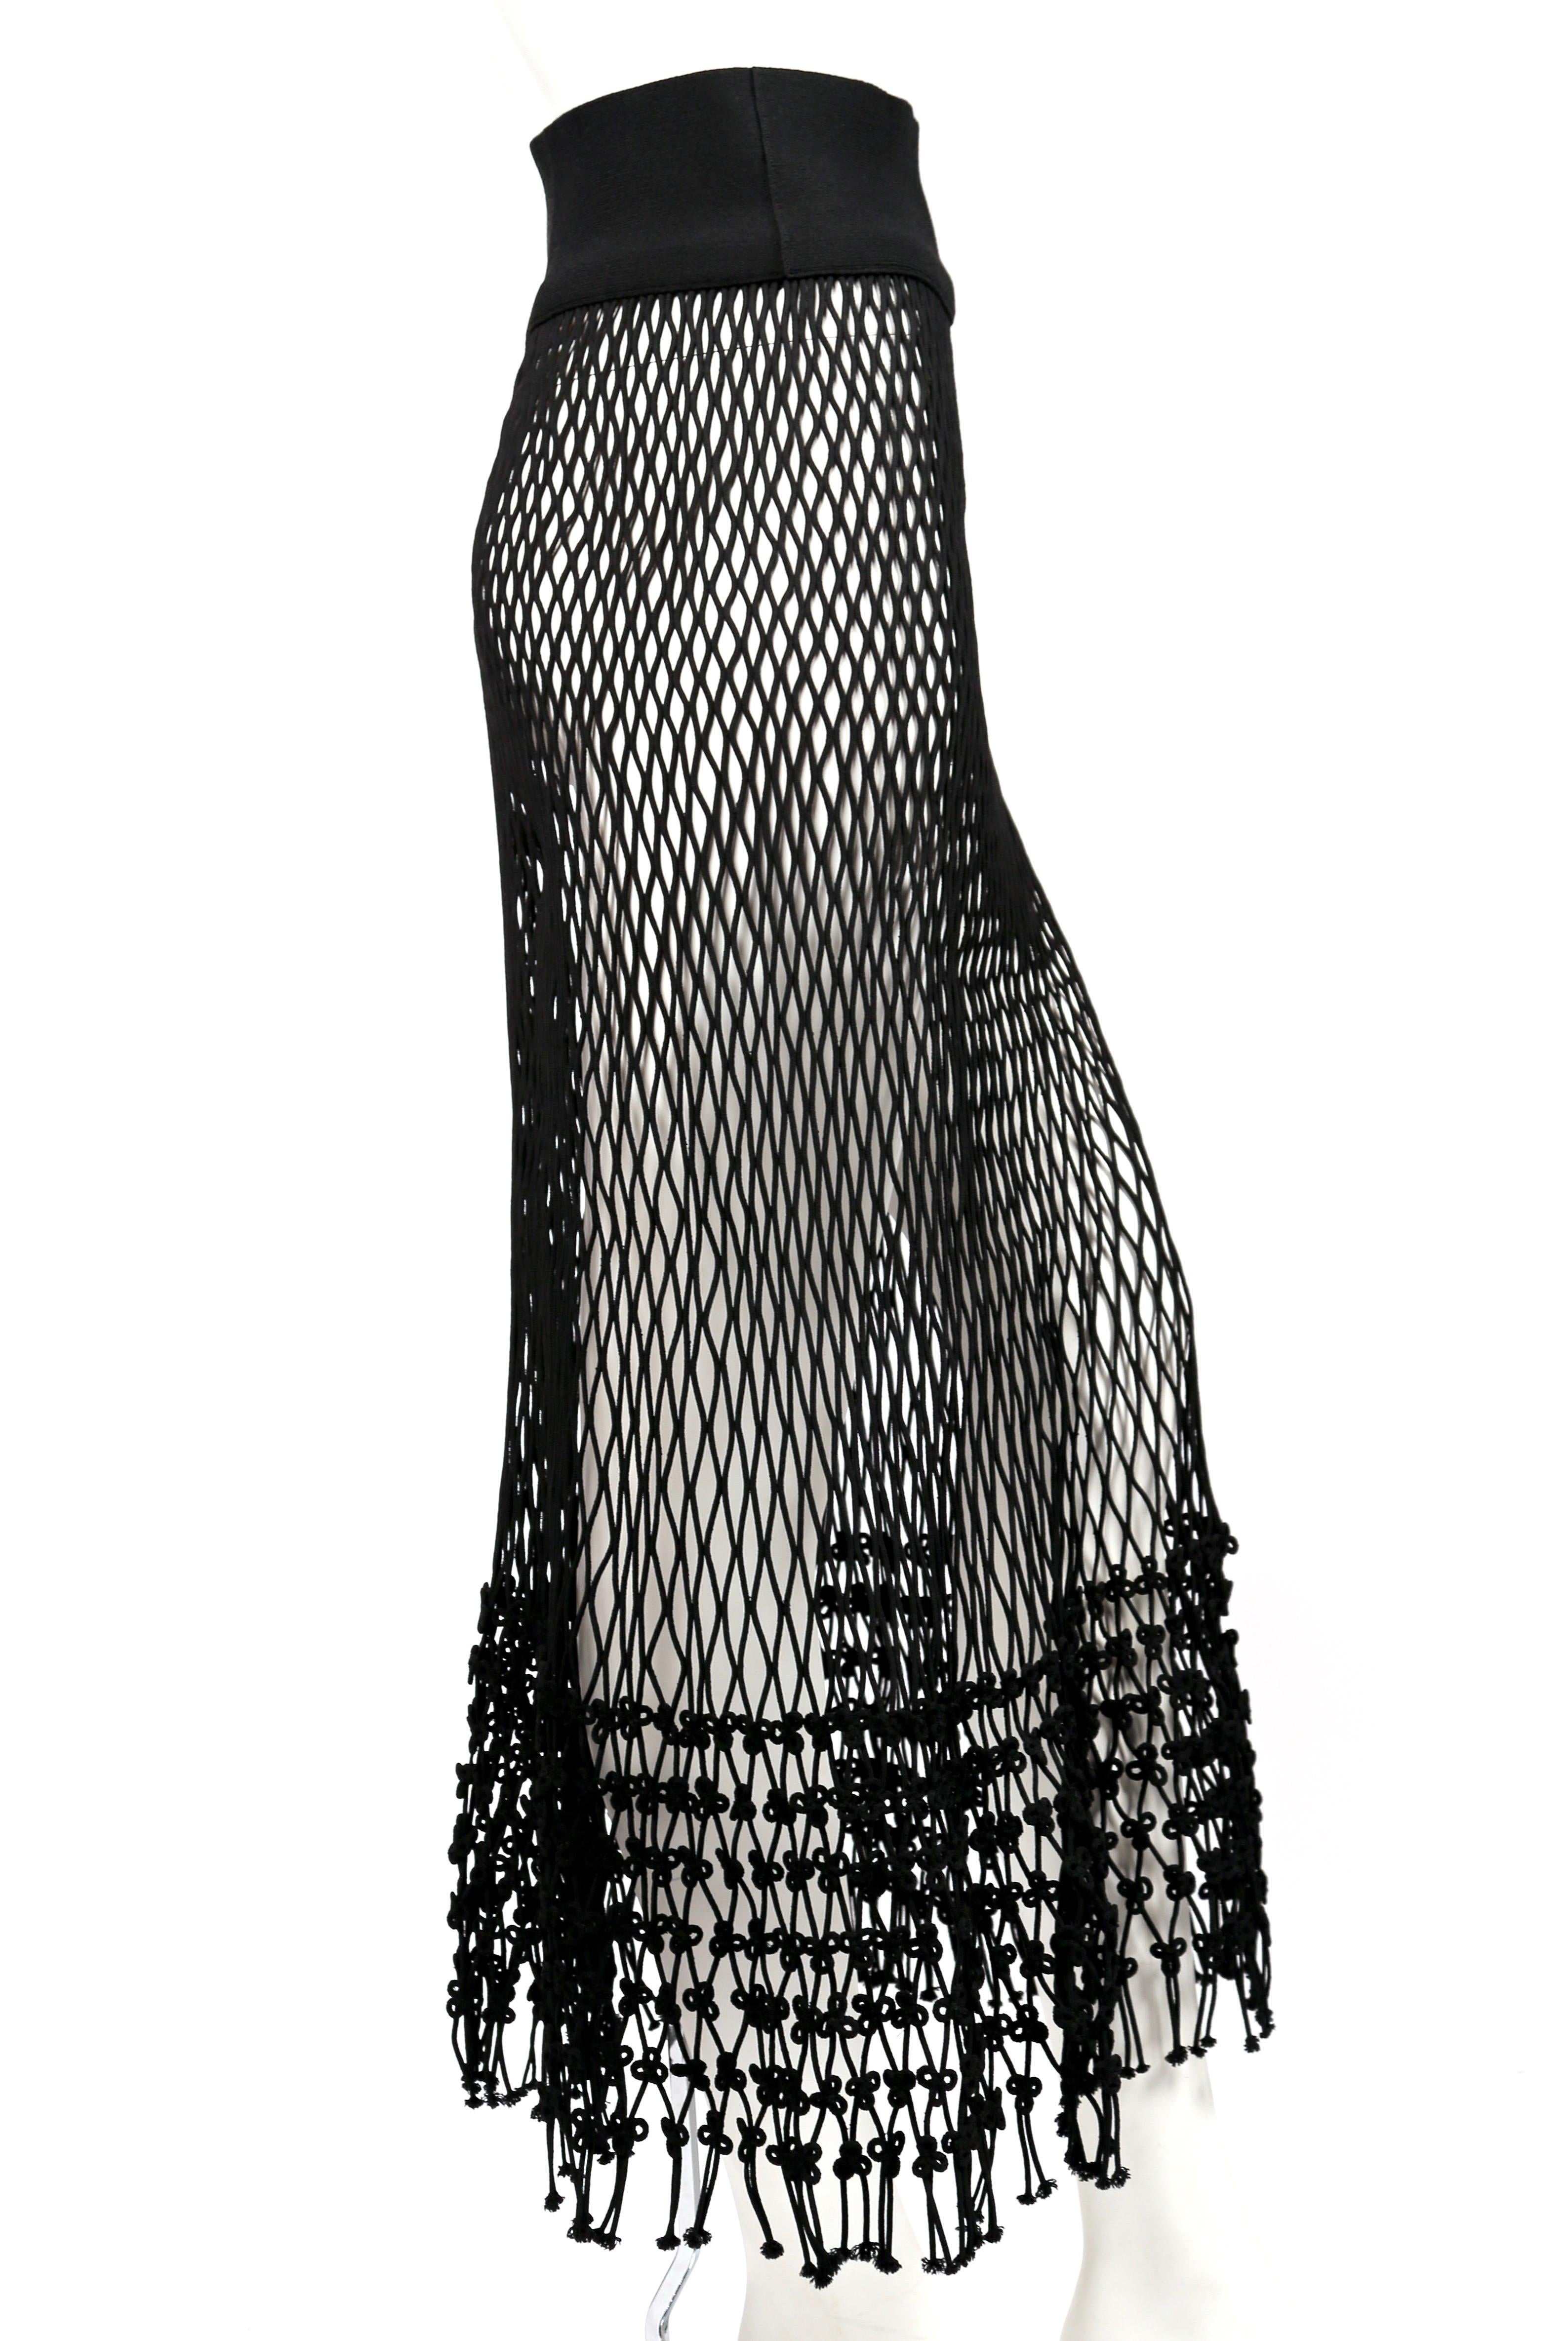 Black 2014 CELINE by PHOEBE PHILO black net runway skirt - new